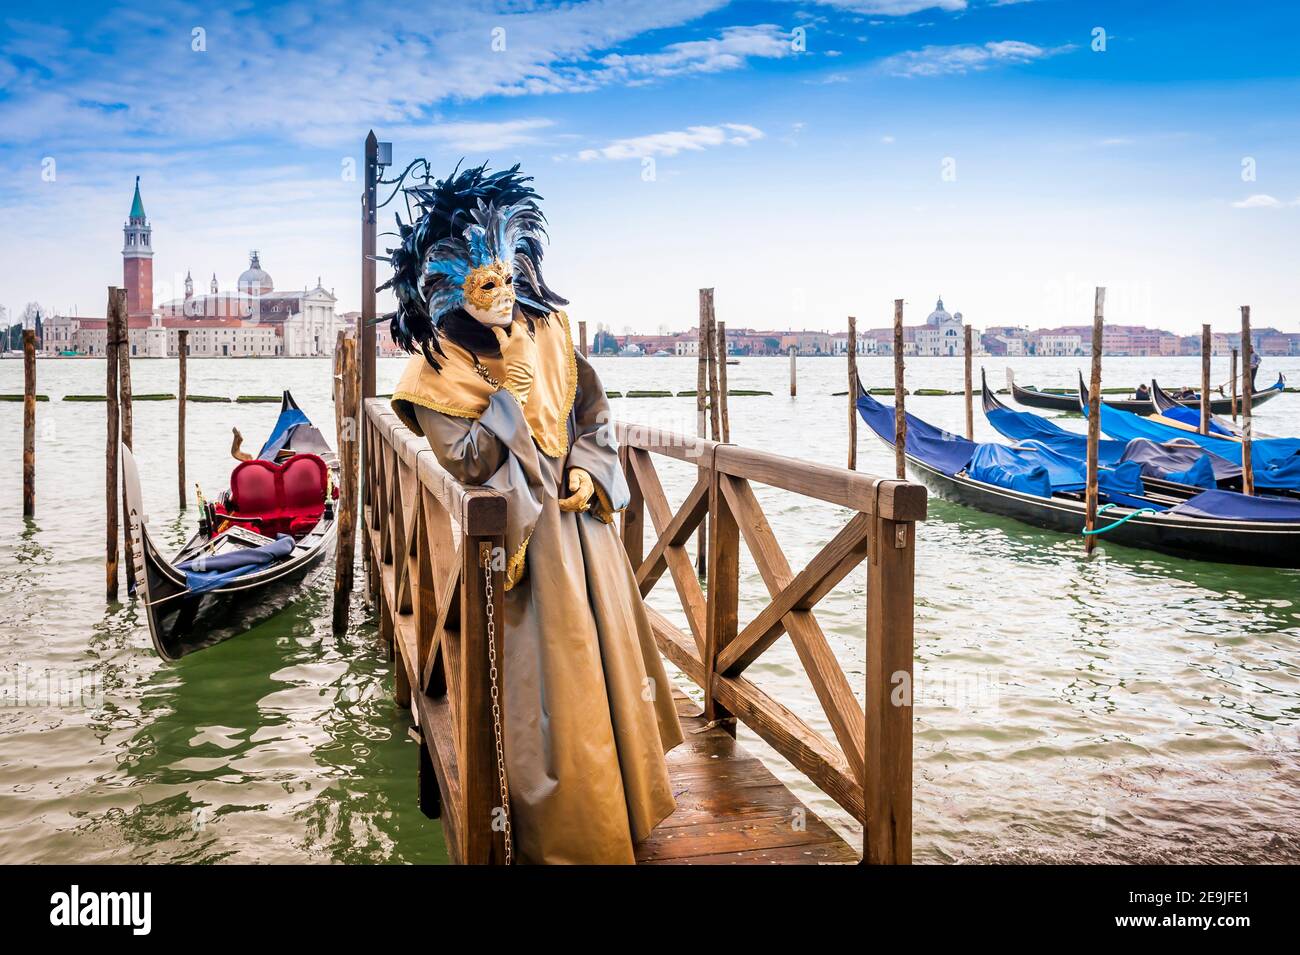 Venedig Karnevalsfigur vor der Lagune und der Insel San Giorgio Maggiore in Venedig, Venetien, Italien Stockfoto